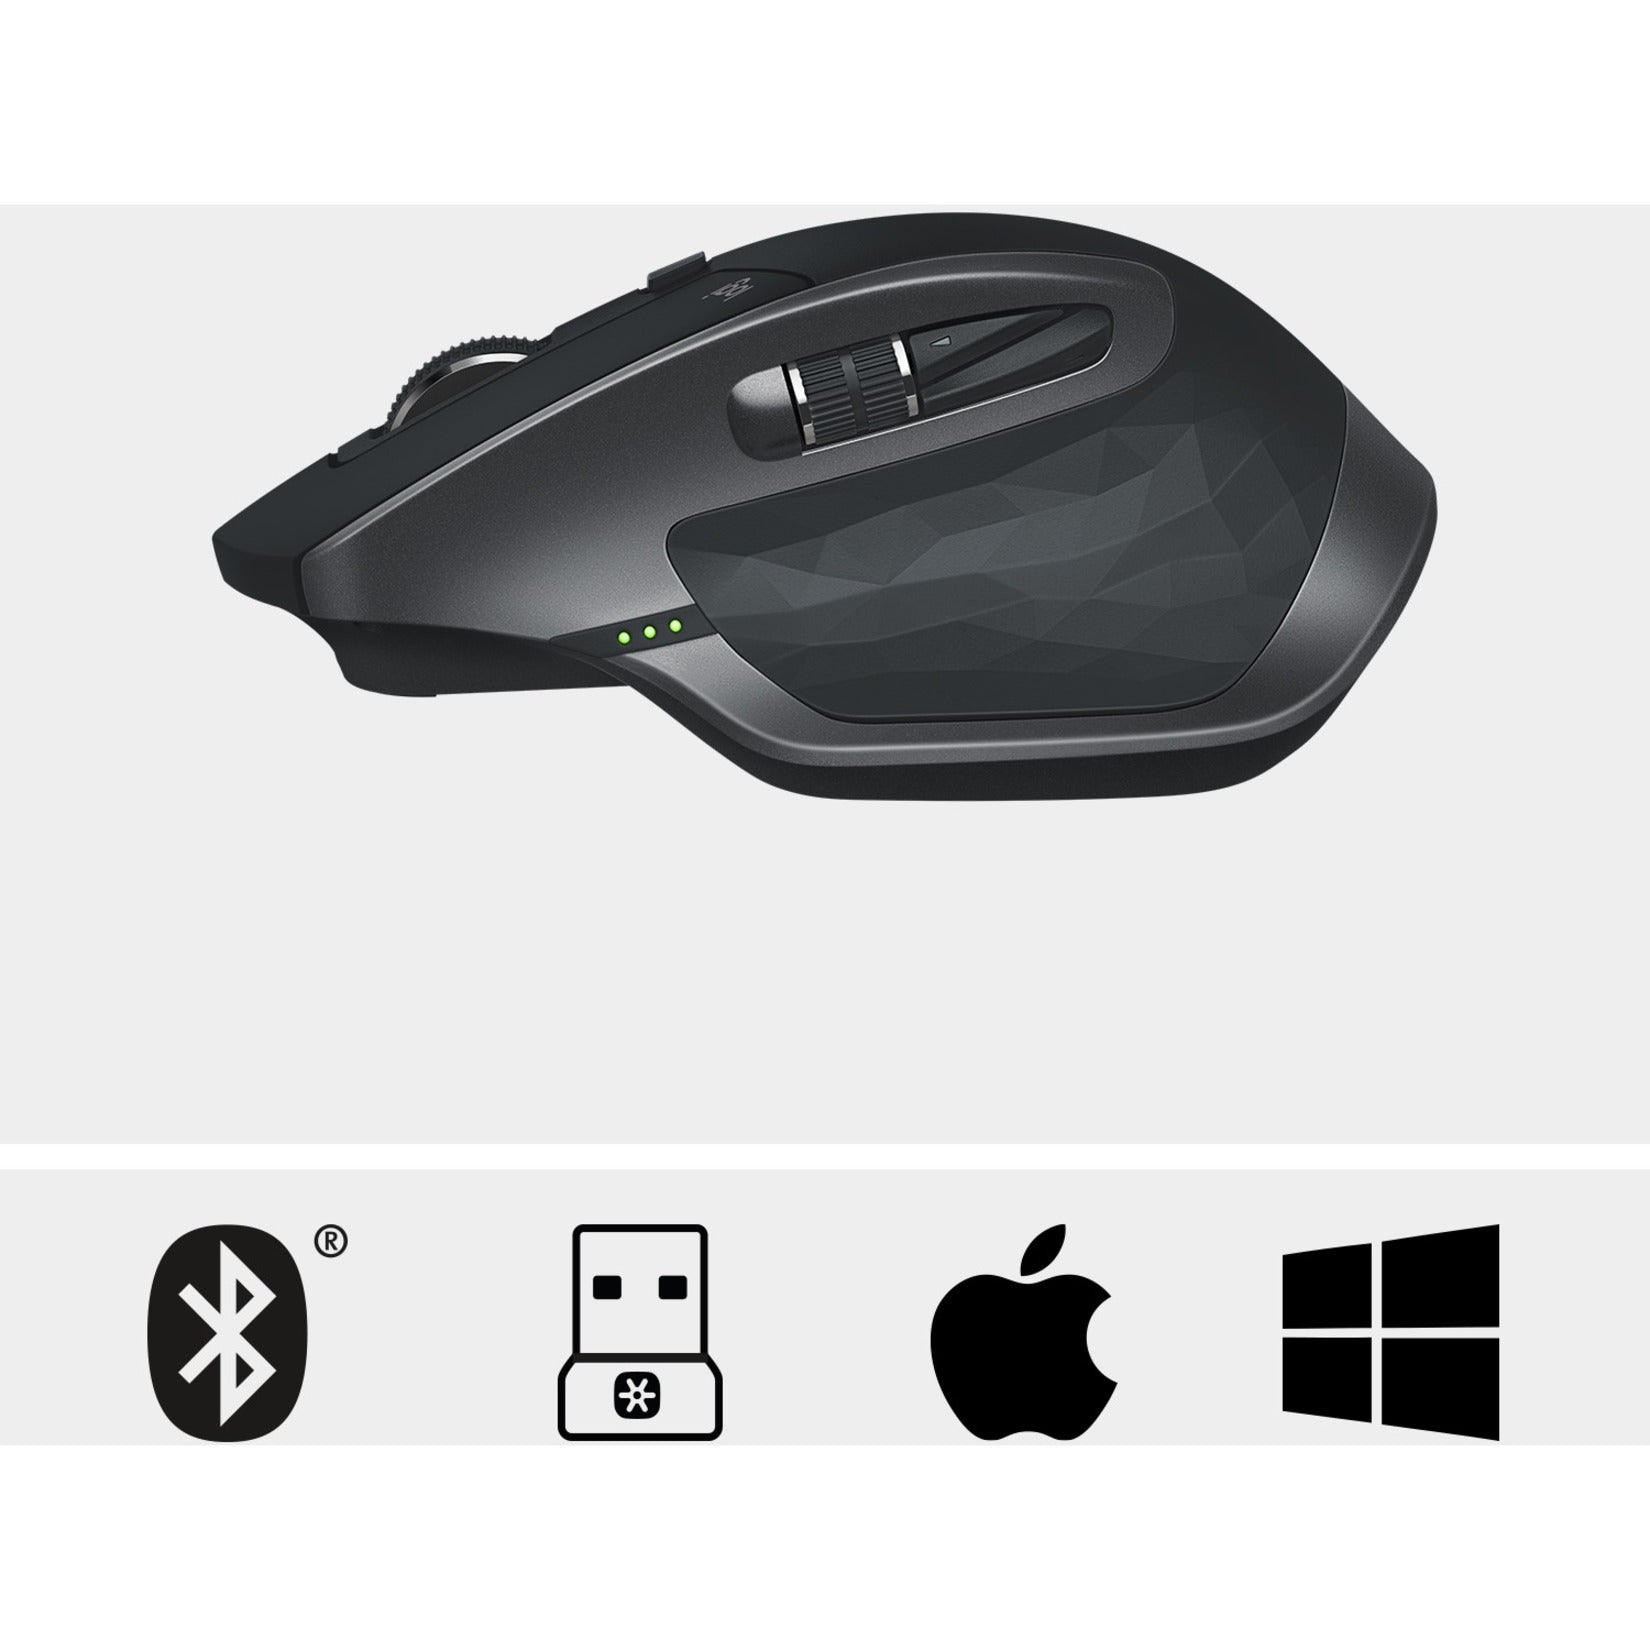 Logitech 910-005965 MX Master 2S Wireless Mouse, Darkfield Scrolling, 4000 dpi, Graphite